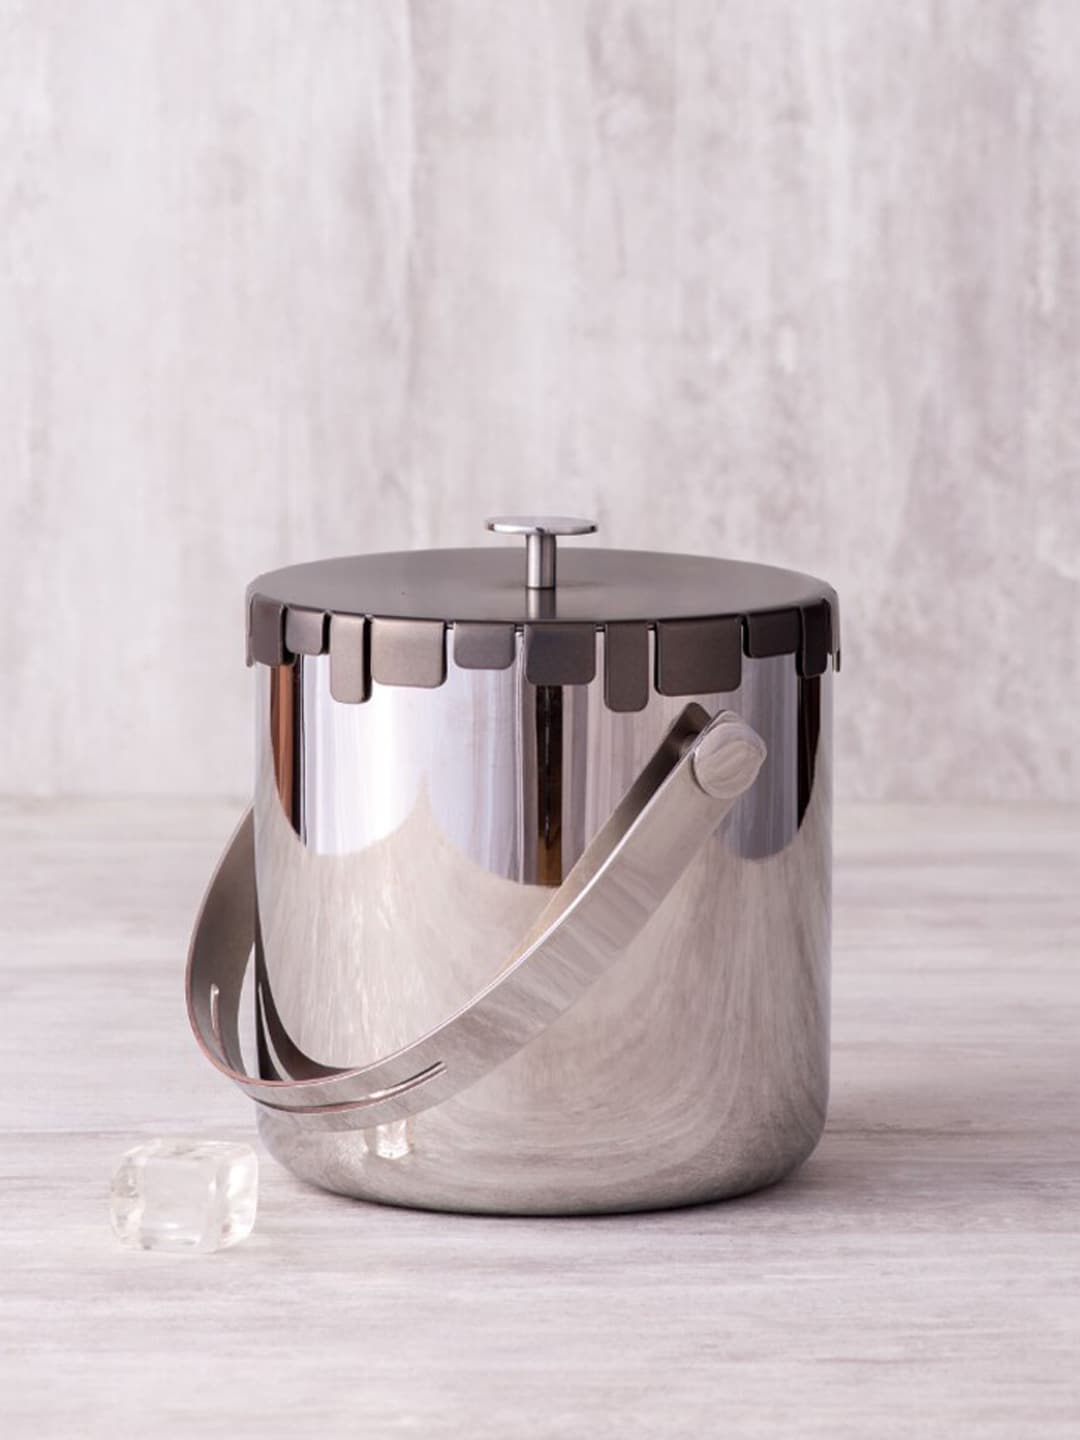 ARTTDINOX Silver-Toned Stainless Steel Urban Ice Bucket Price in India